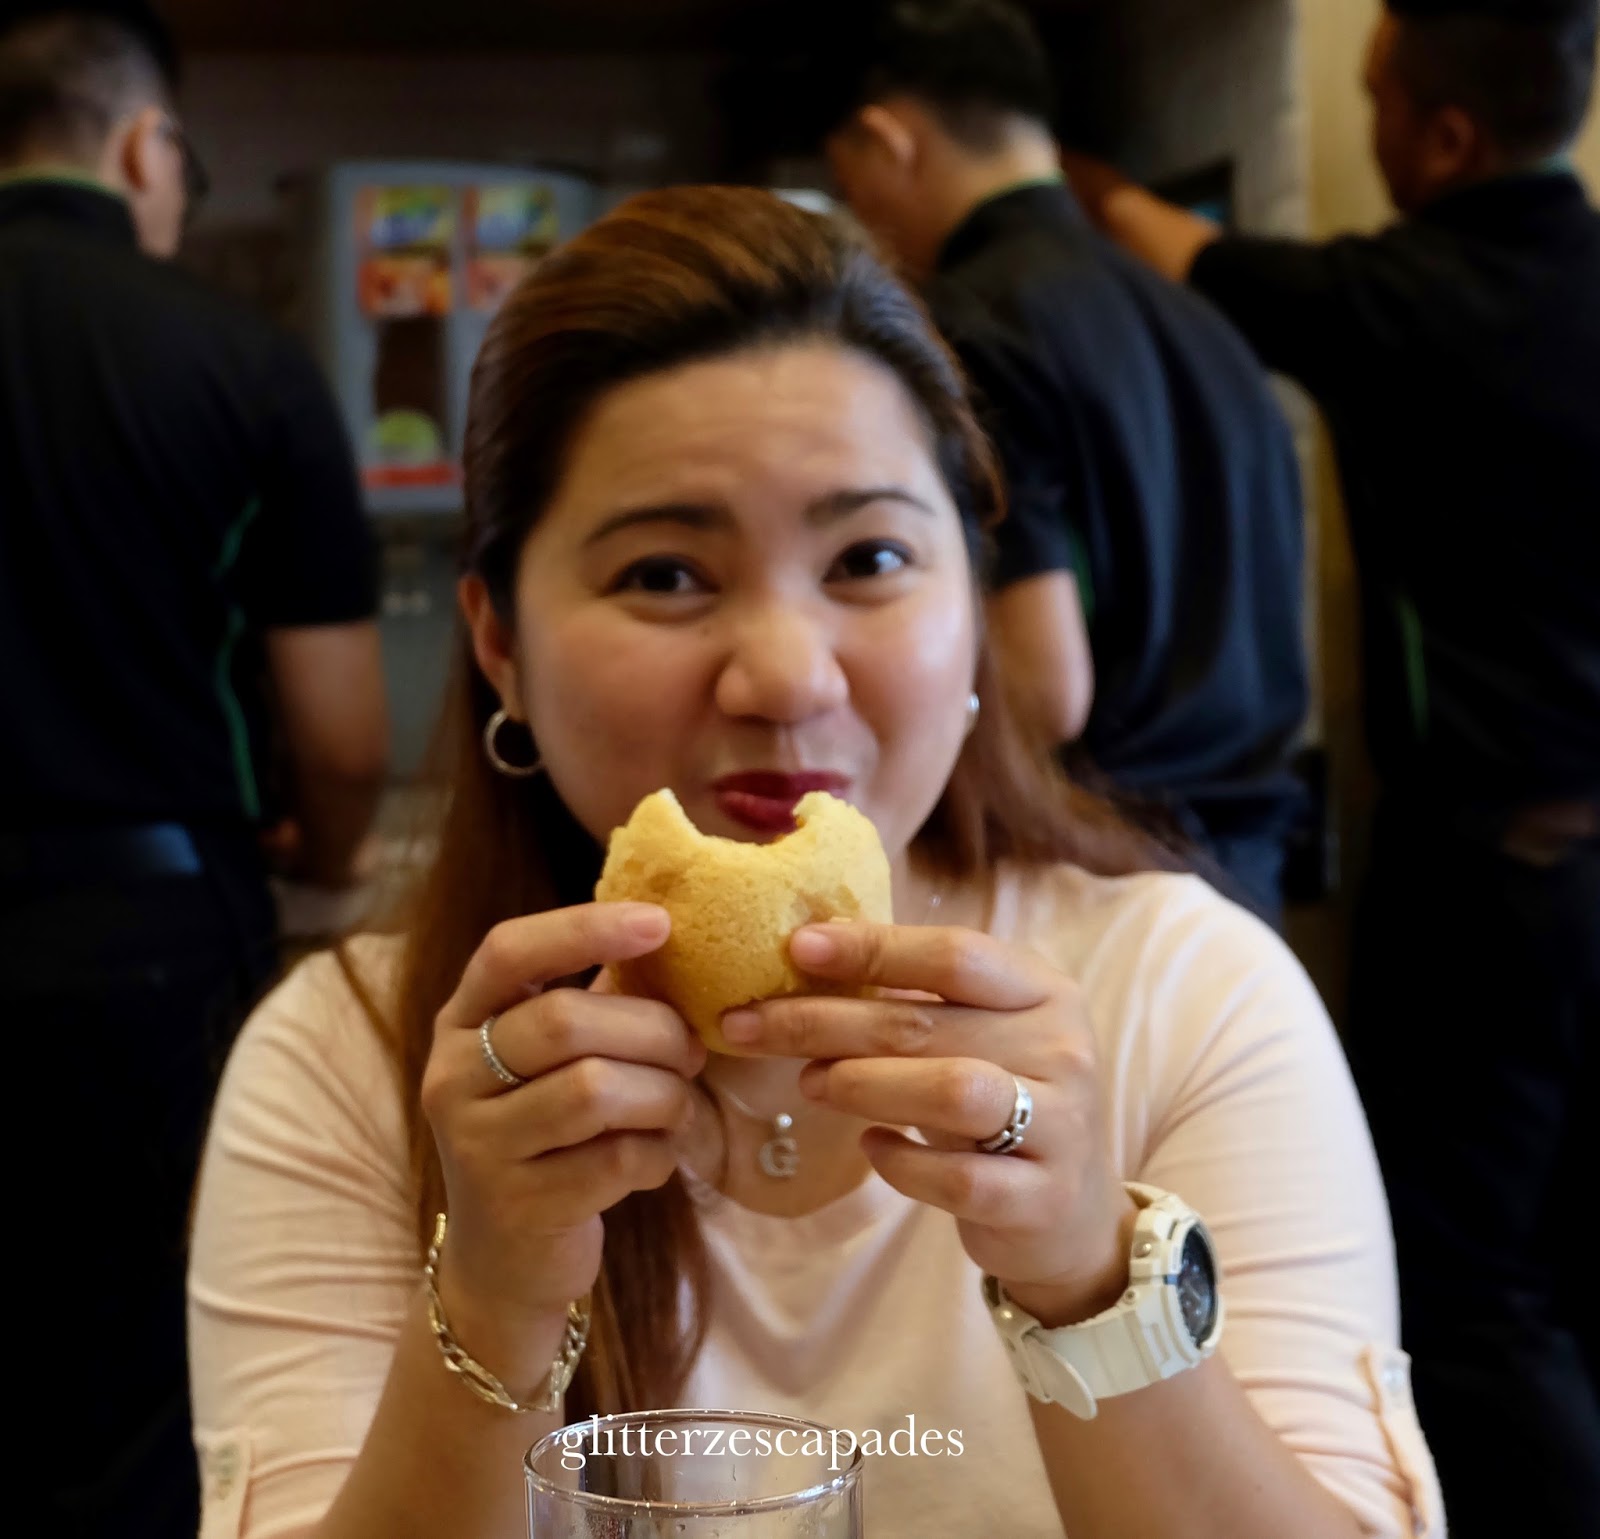 Tim Ho Wan, a Michelin starred Dim Sum Restaurant opens in Cebu!